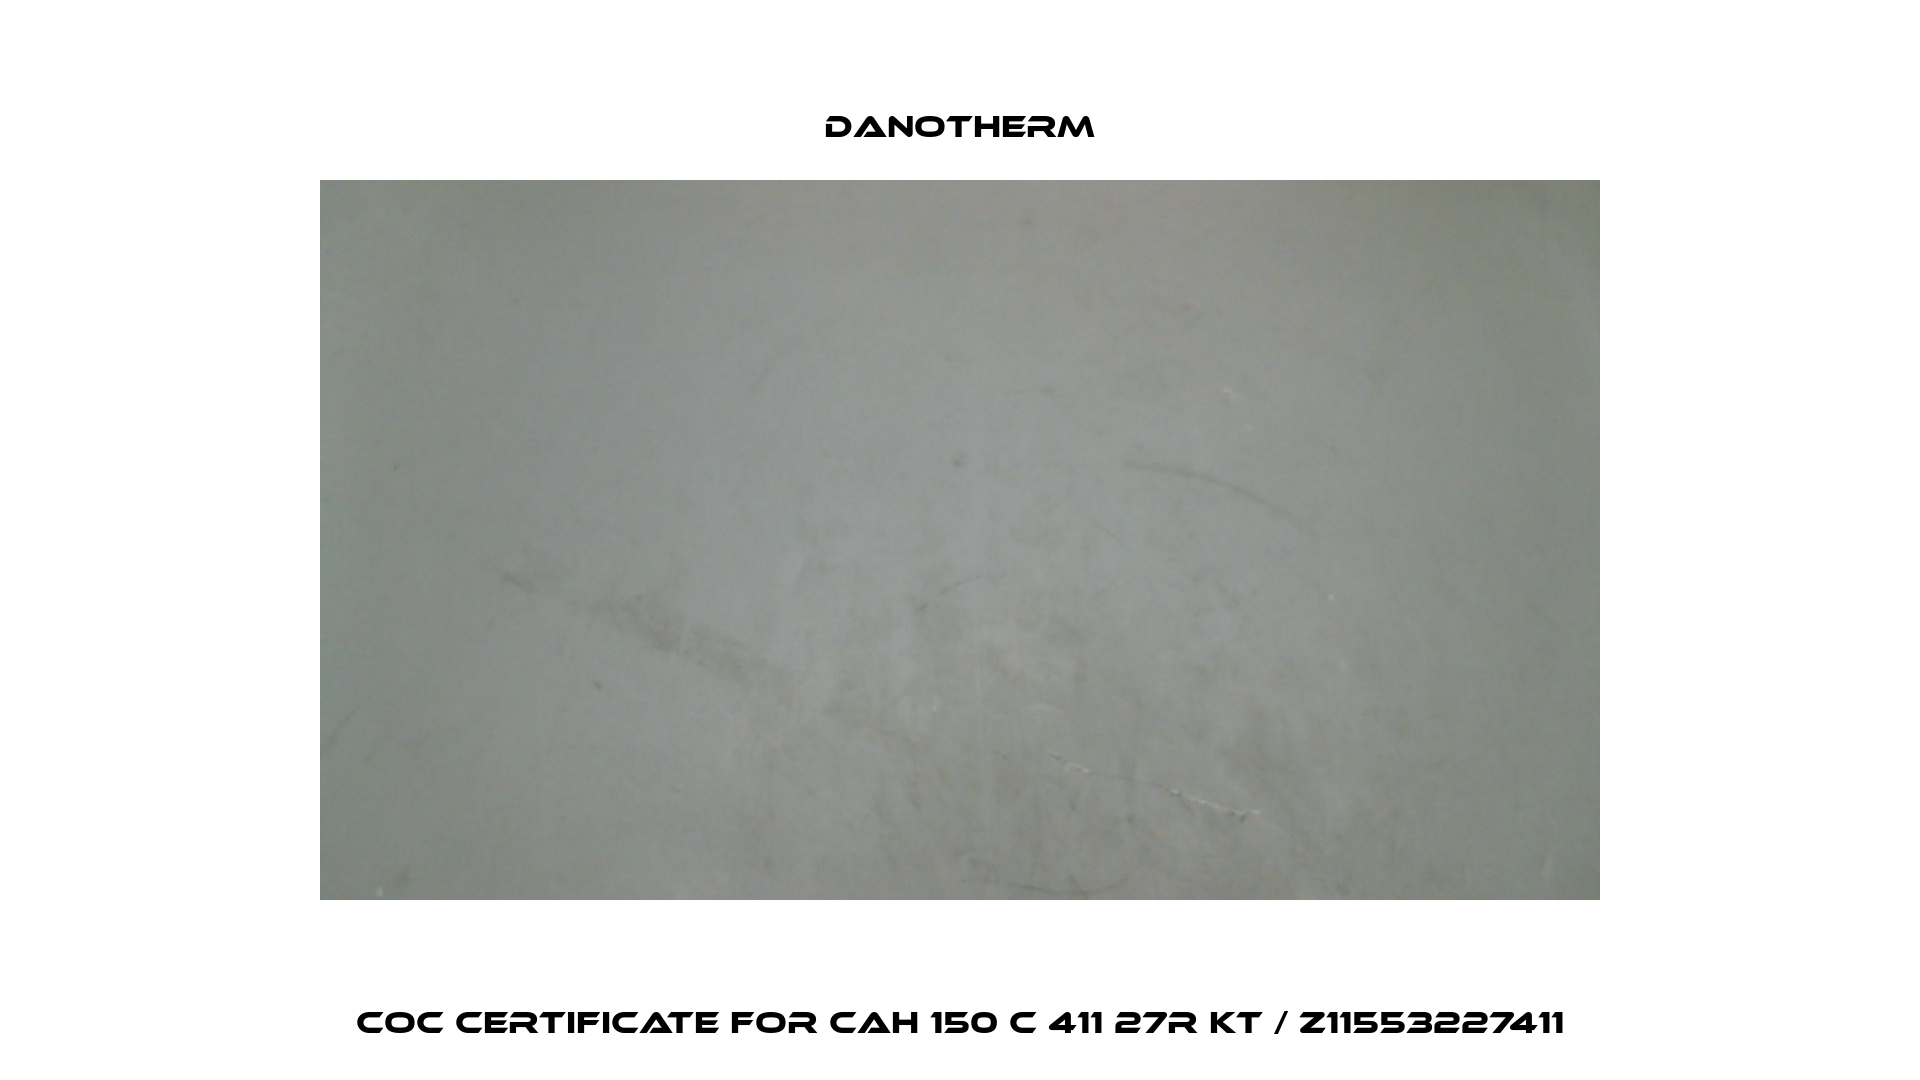 COC certificate for CAH 150 C 411 27R KT / Z11553227411 Danotherm